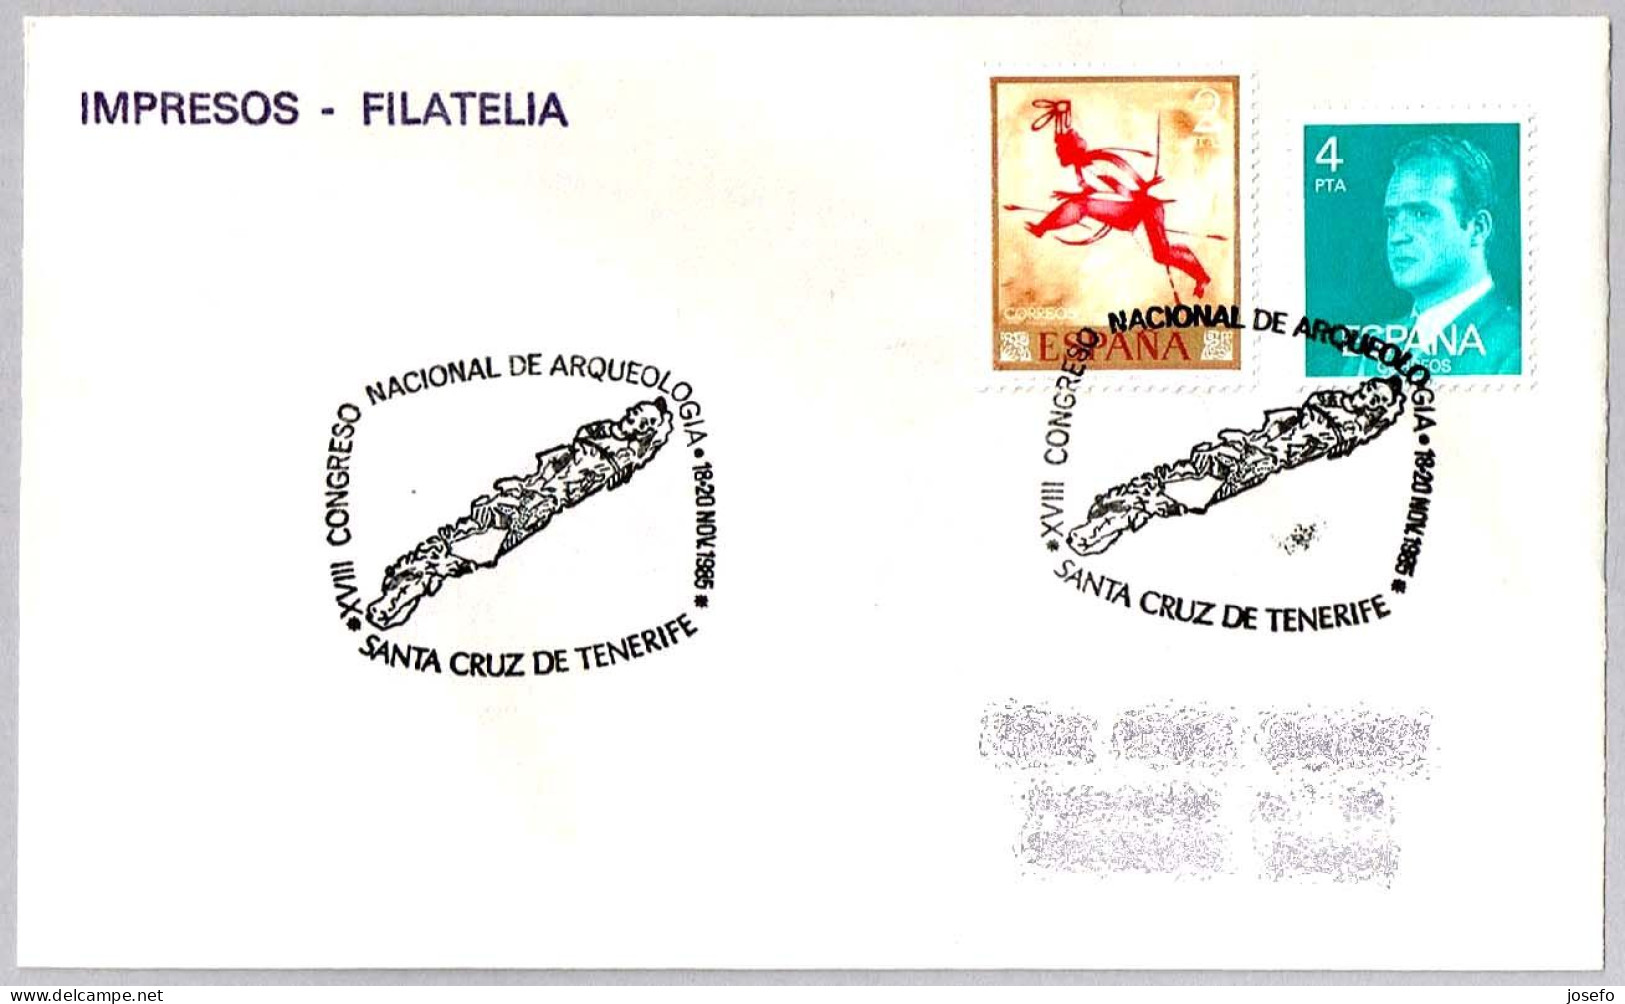 CONGRESO NACIONAL DE ARQUEOLOGIA - Arquelology National Congress. S.C.Tenerife, Canarias, 1985 - Archaeology